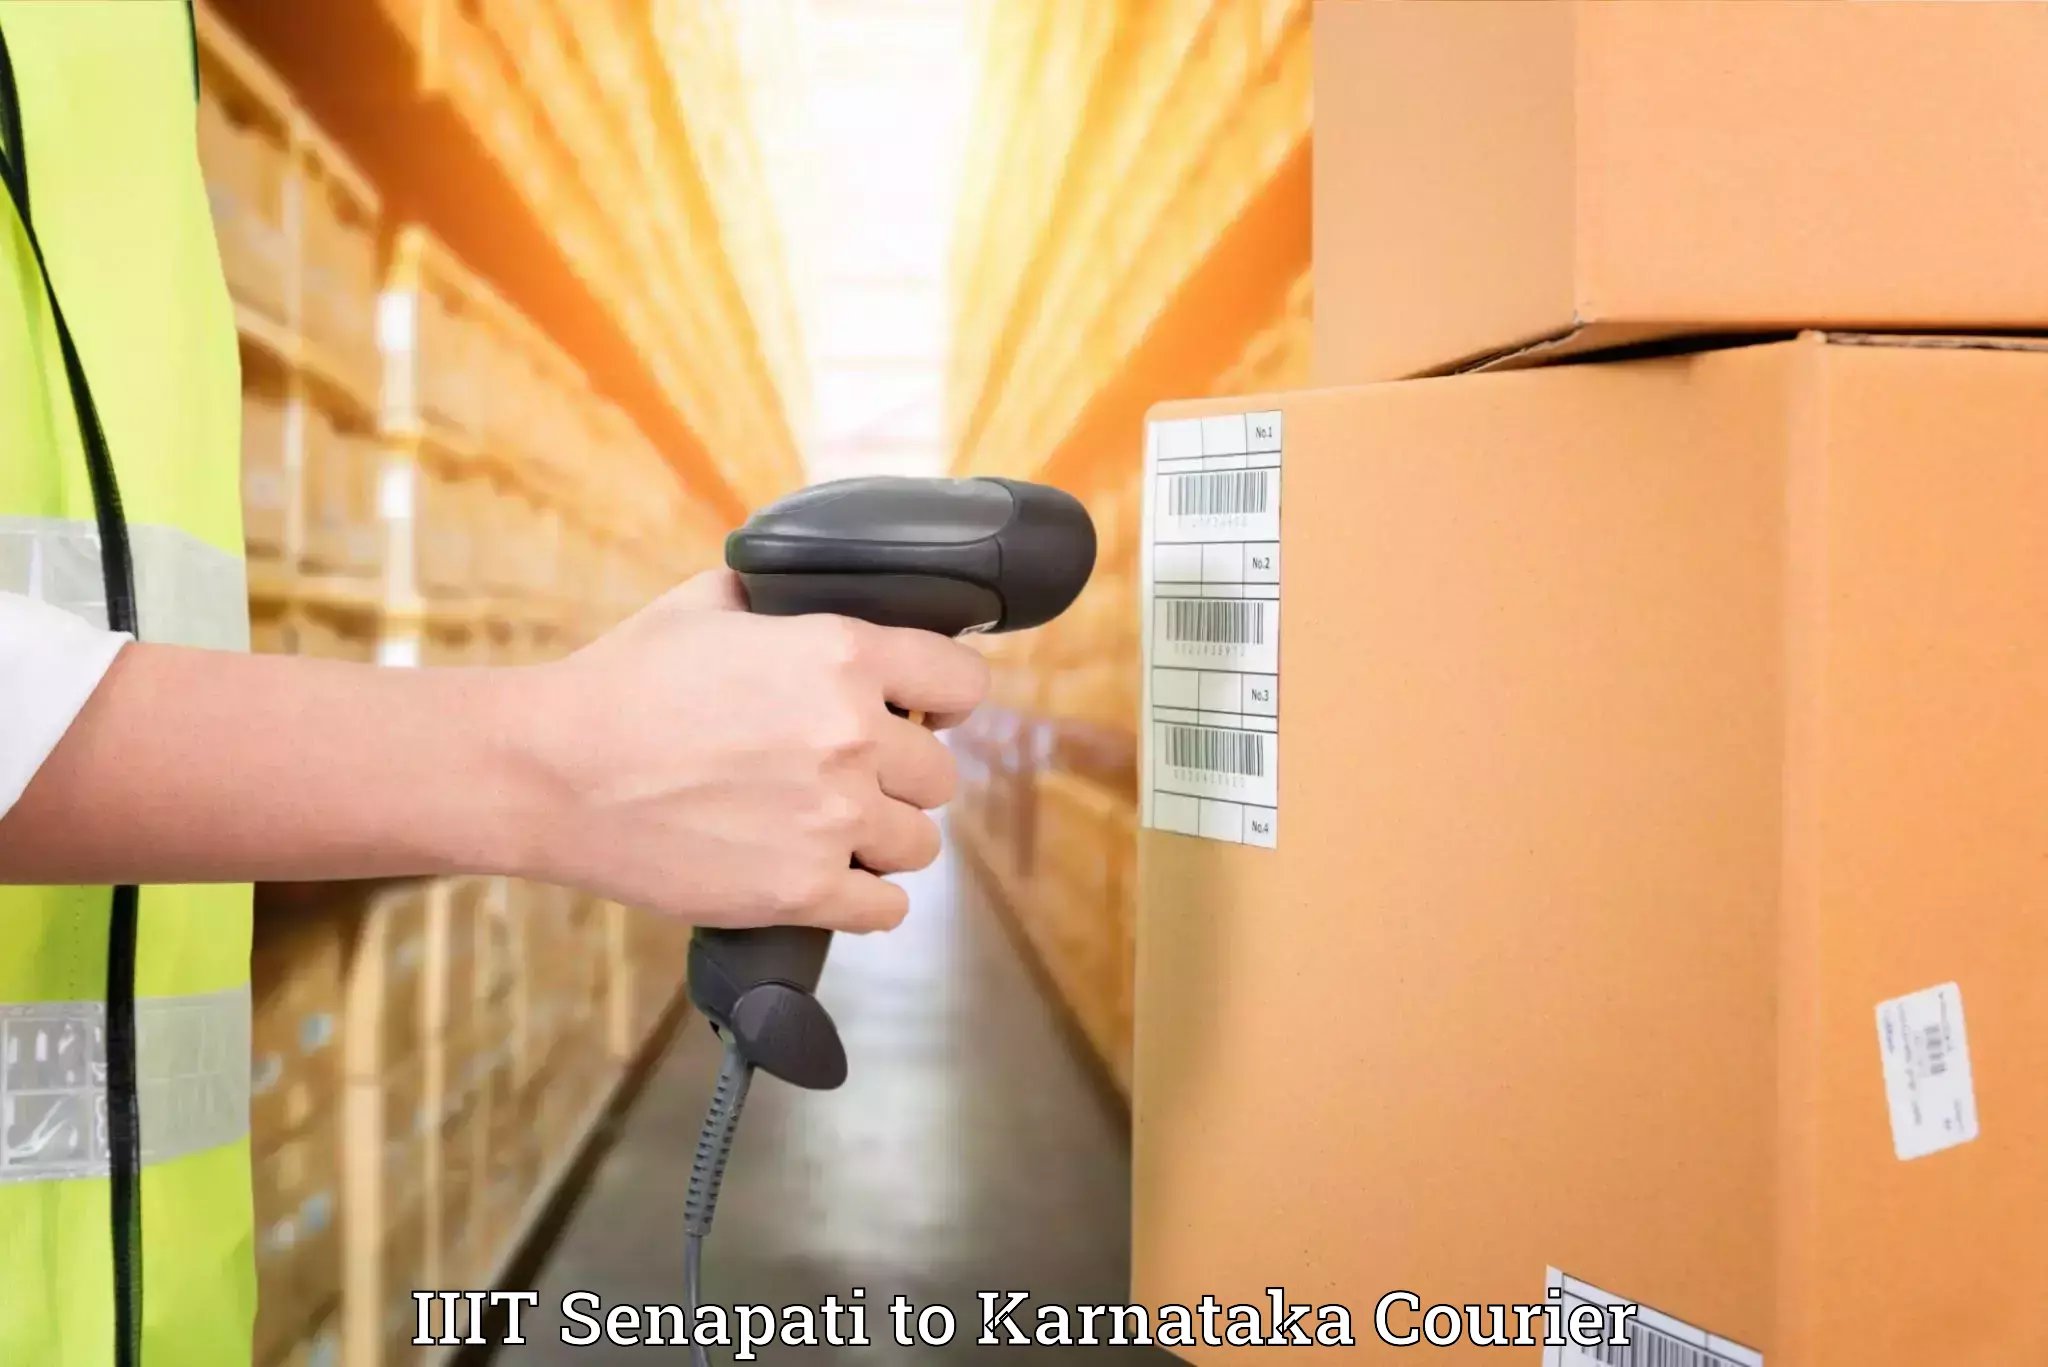 Professional moving company IIIT Senapati to Karnataka